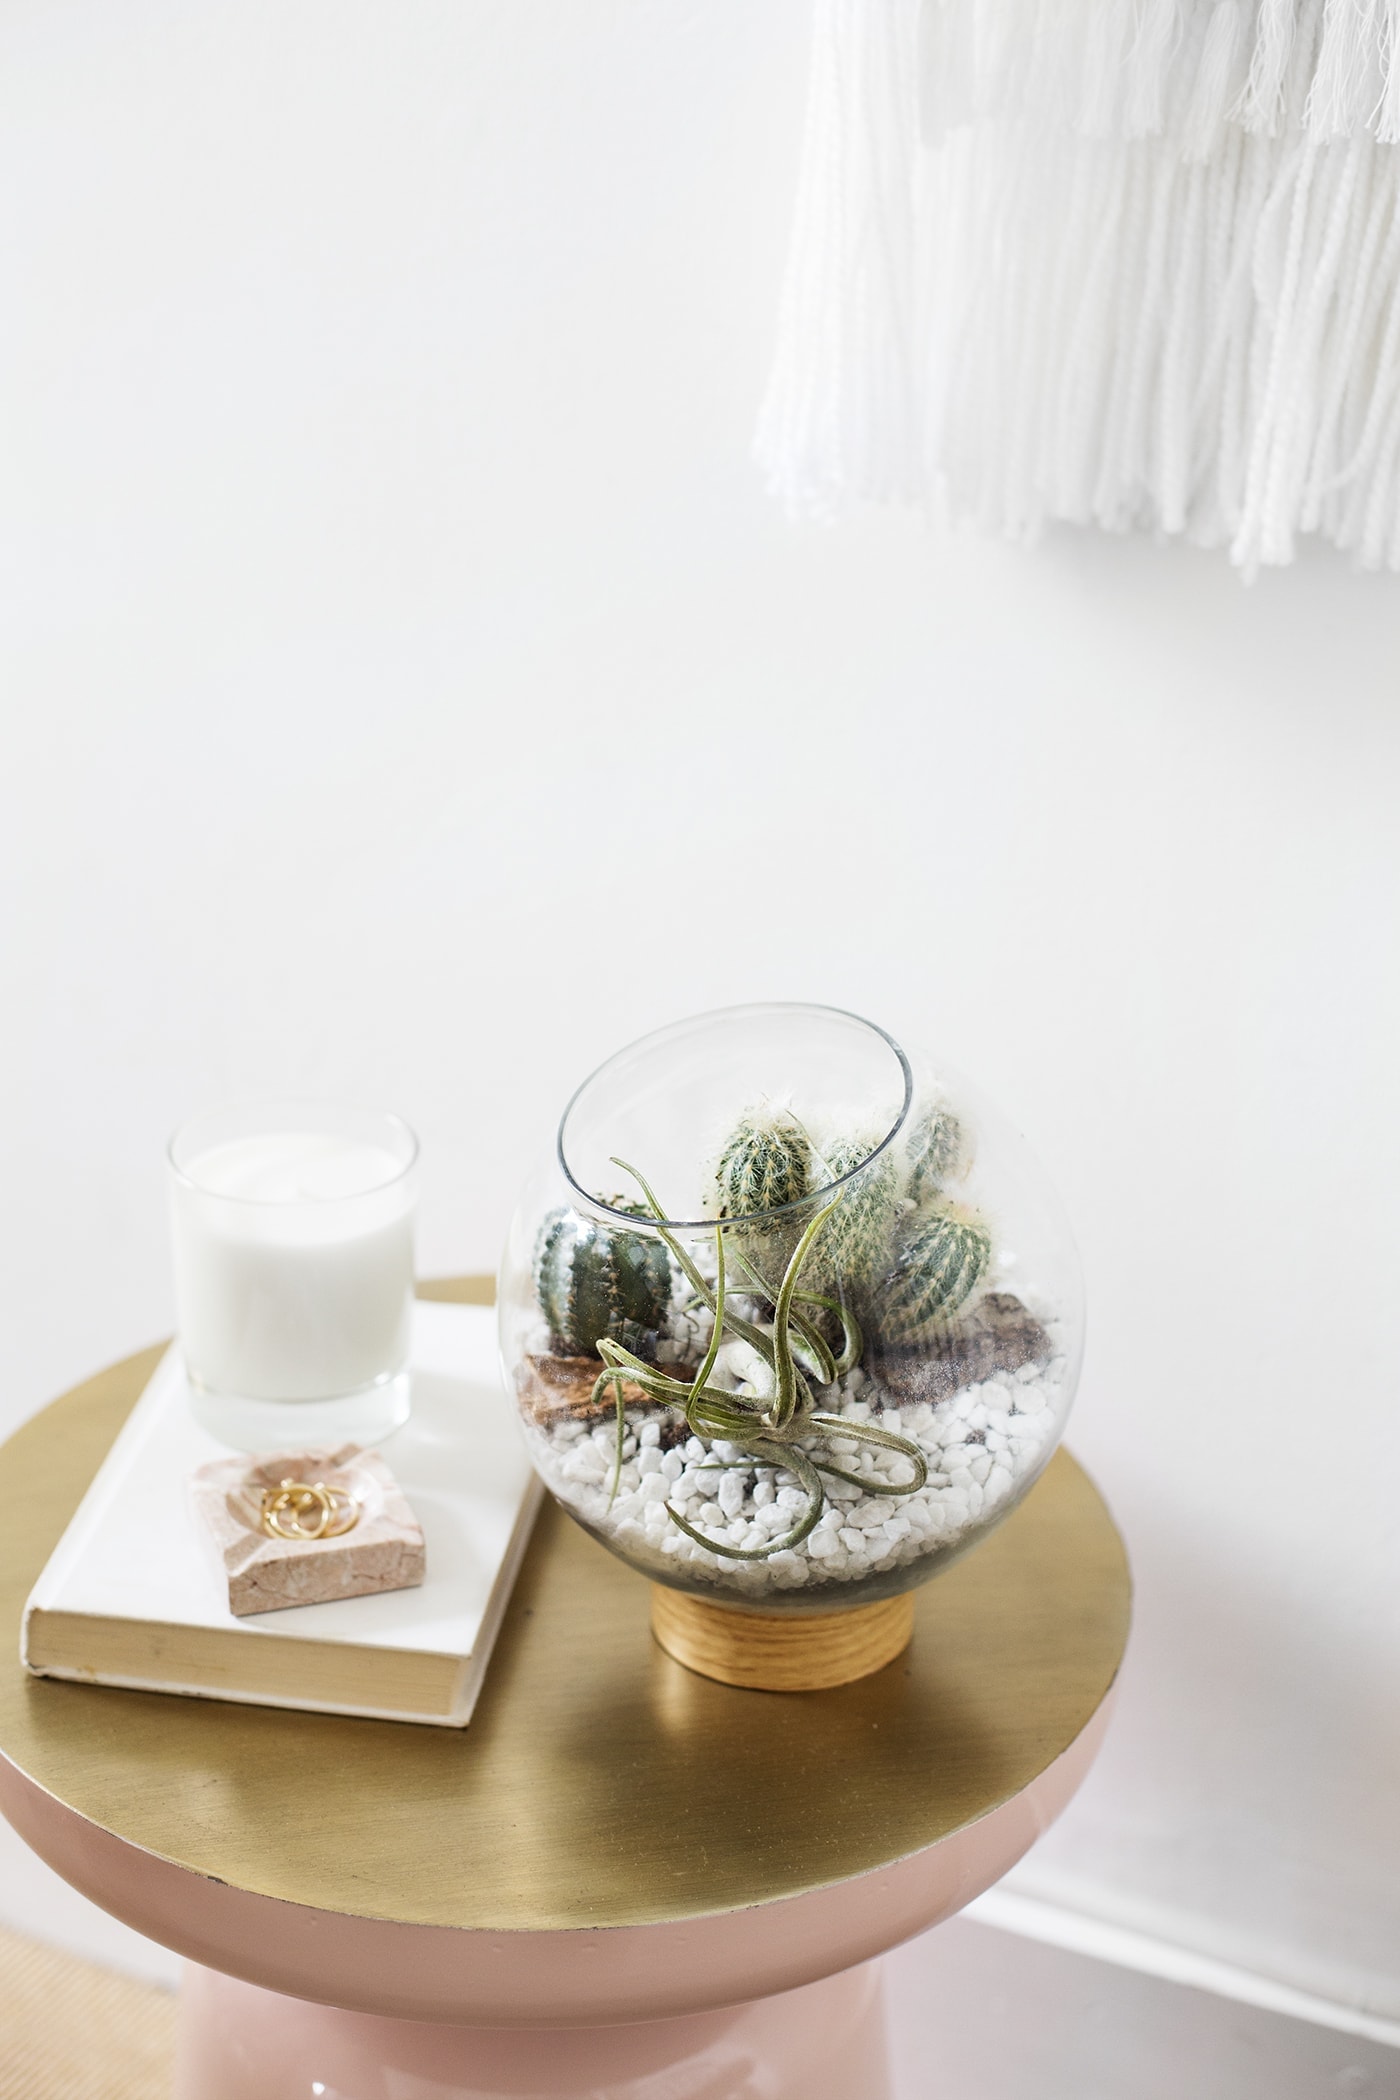 Easy mid century style terrarium project | home DIY | house plants | cacti | craft tutorial